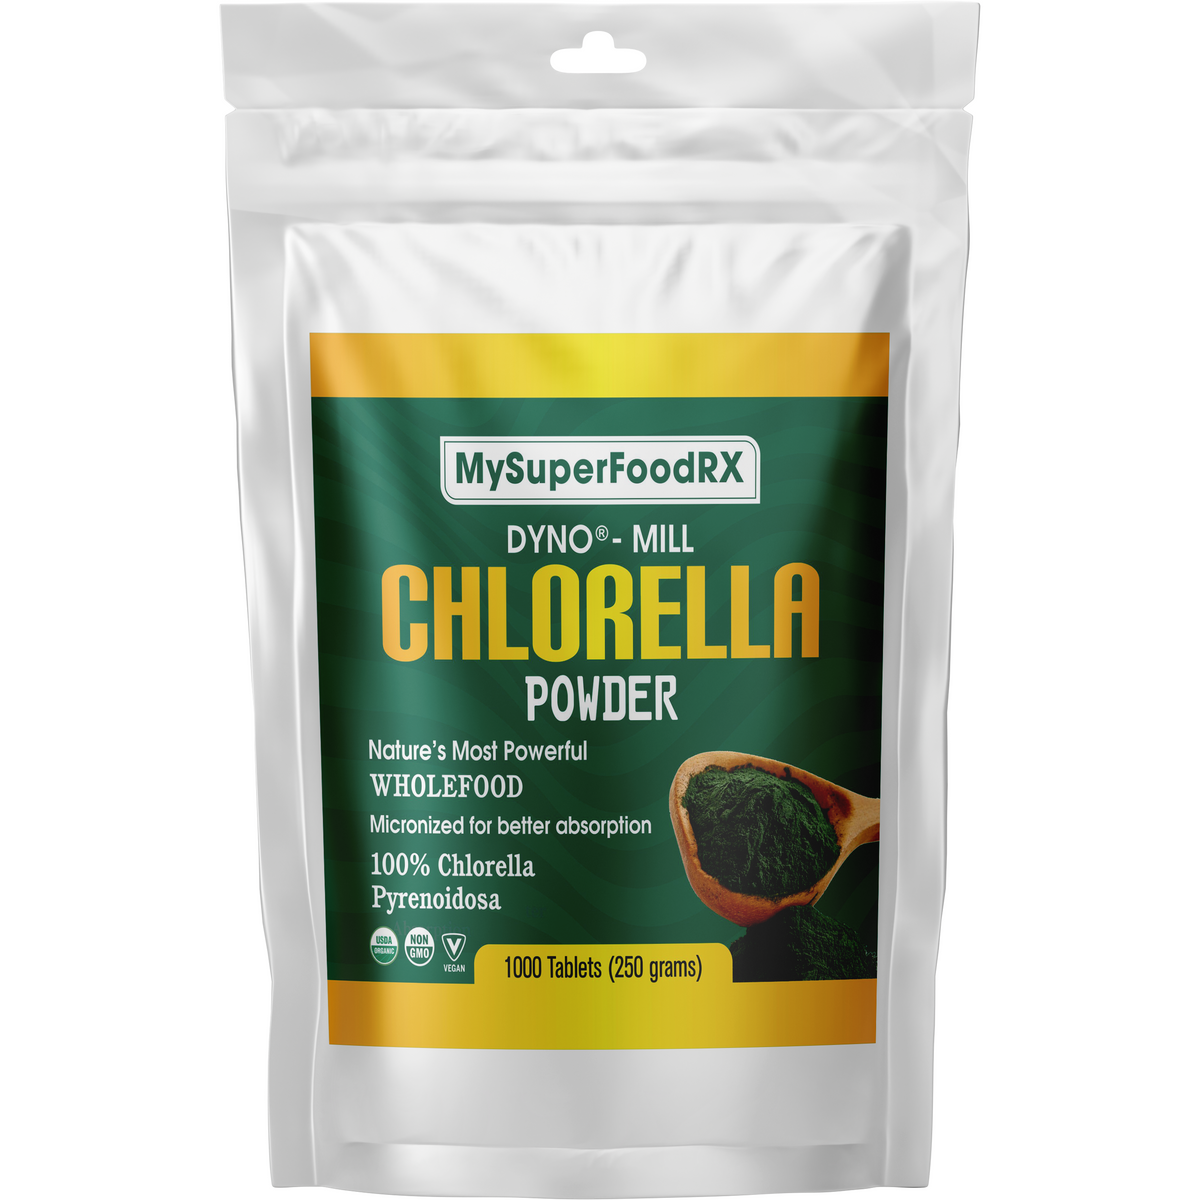 a bag of my superfoodx chlorella powder